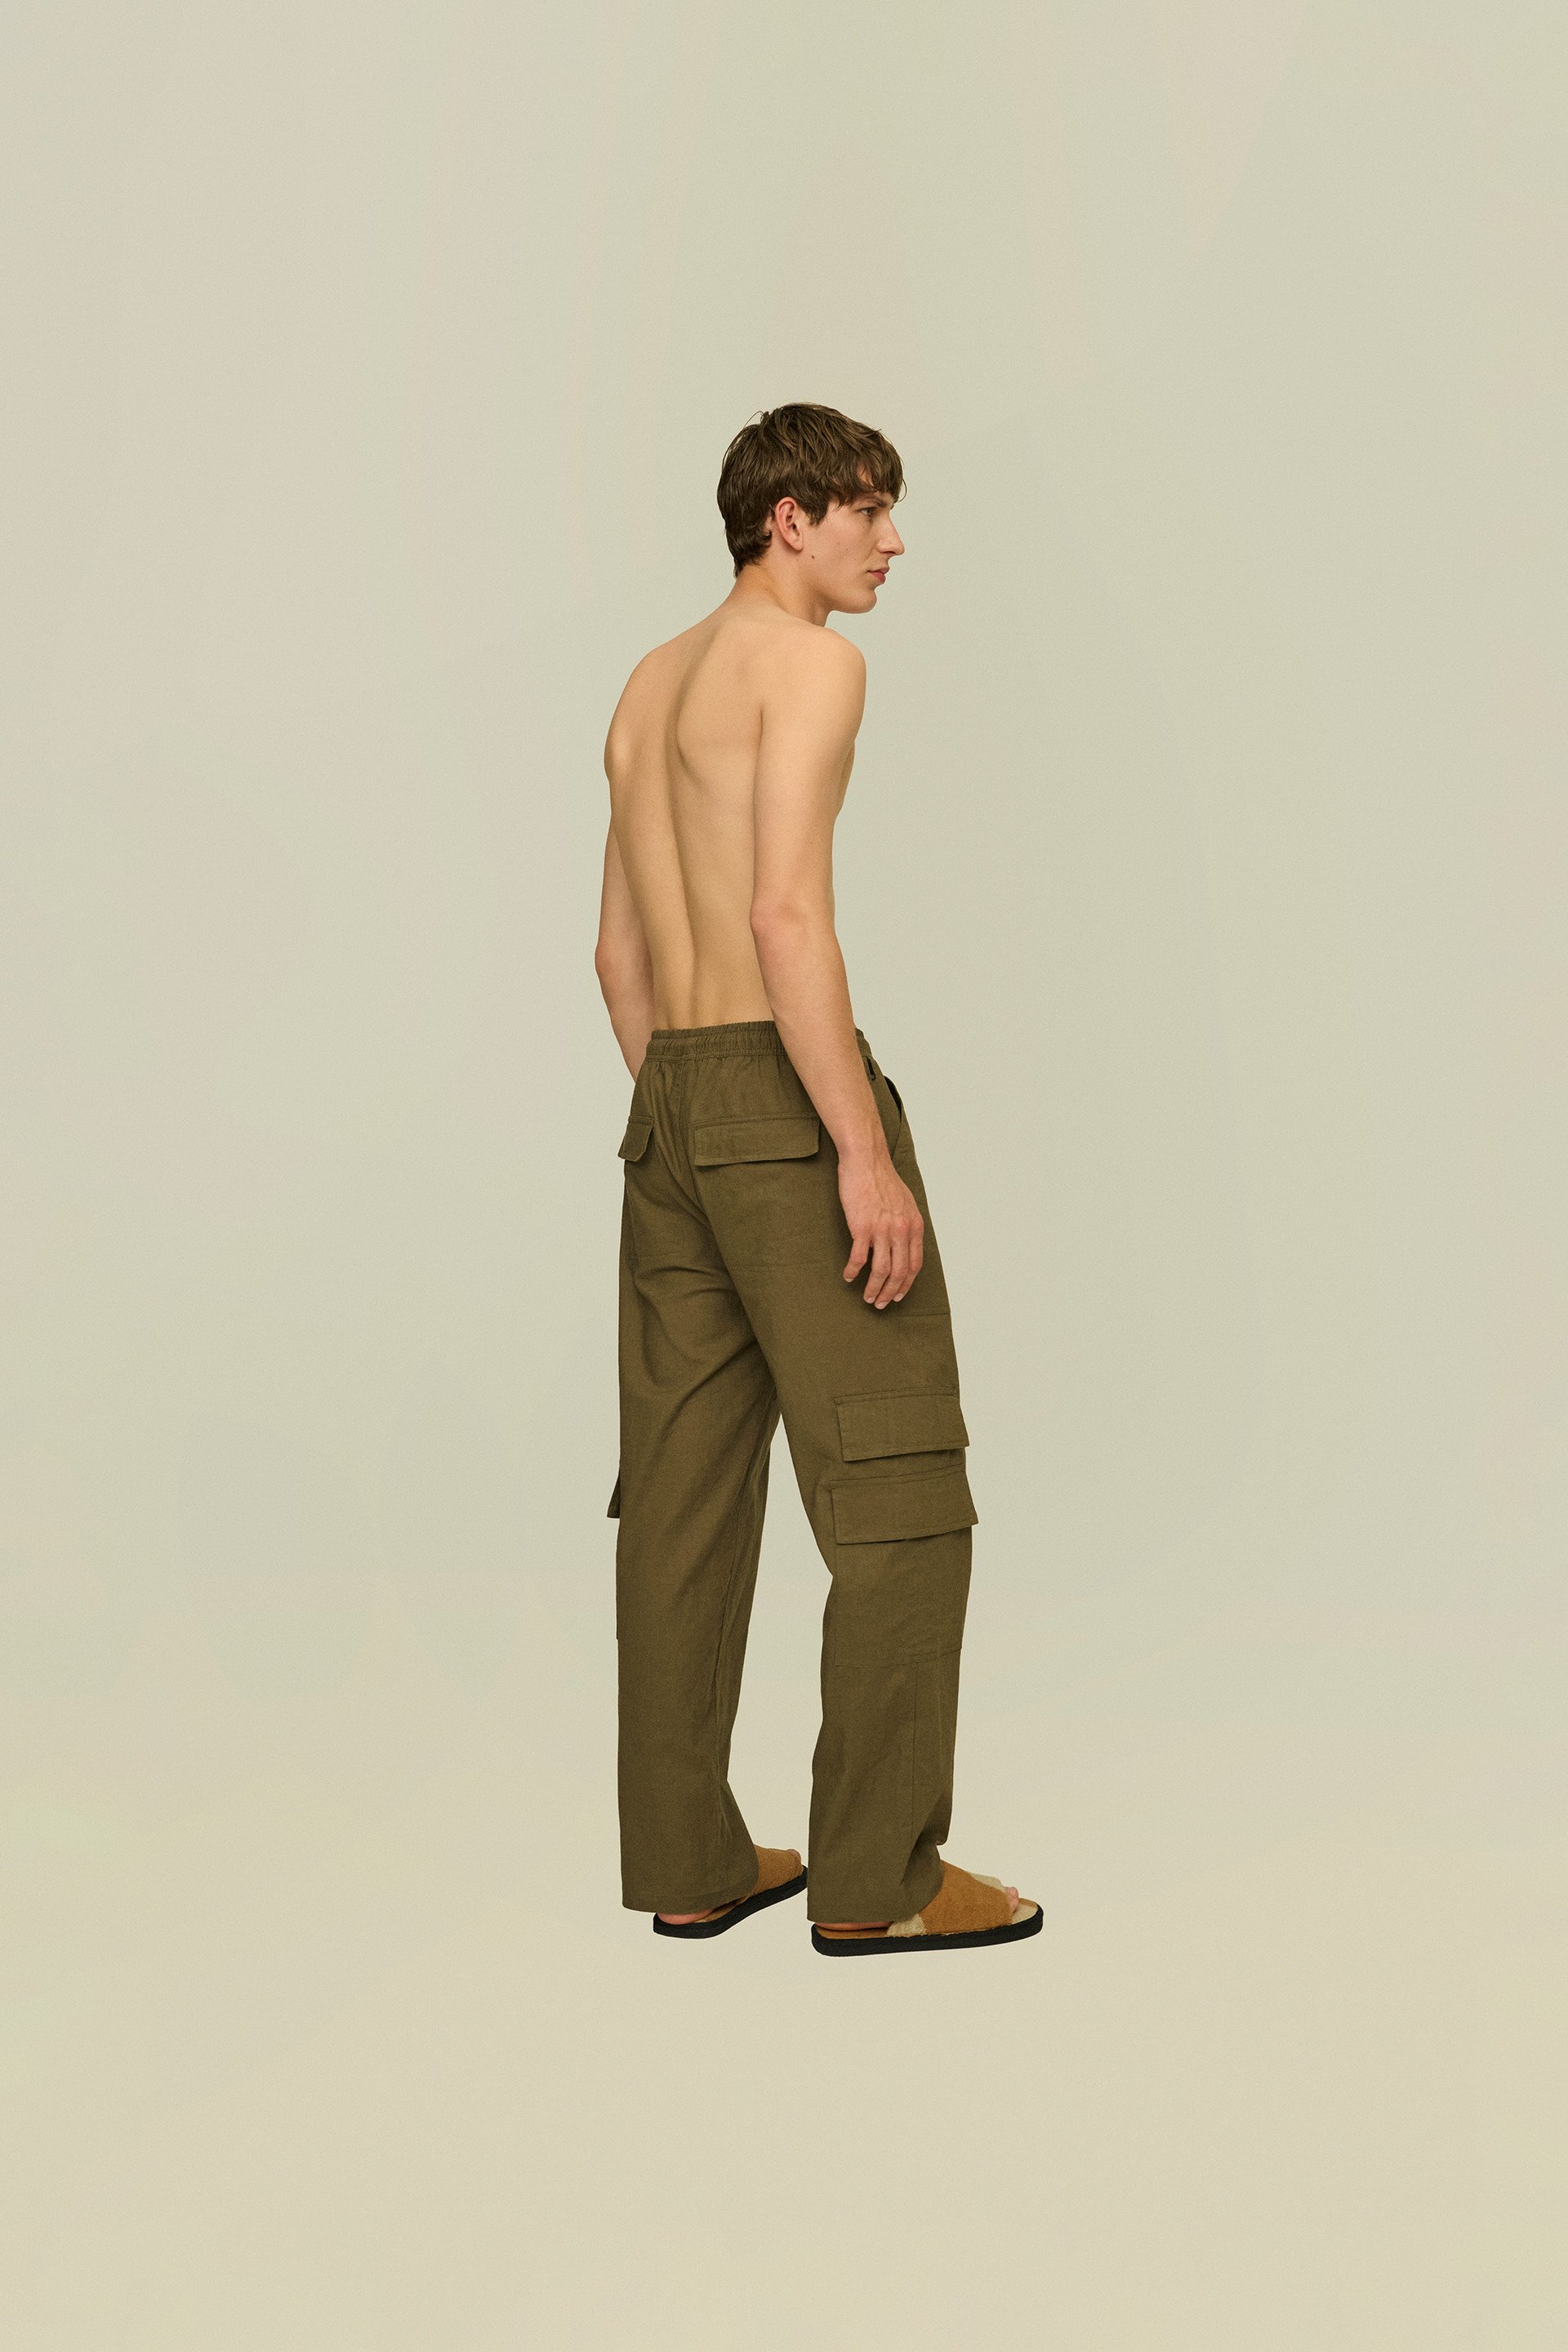 Cargo Pants Army Military Tactical Pants Men Work Pantalones Combat SWAT  Tactical Clothes Trouser